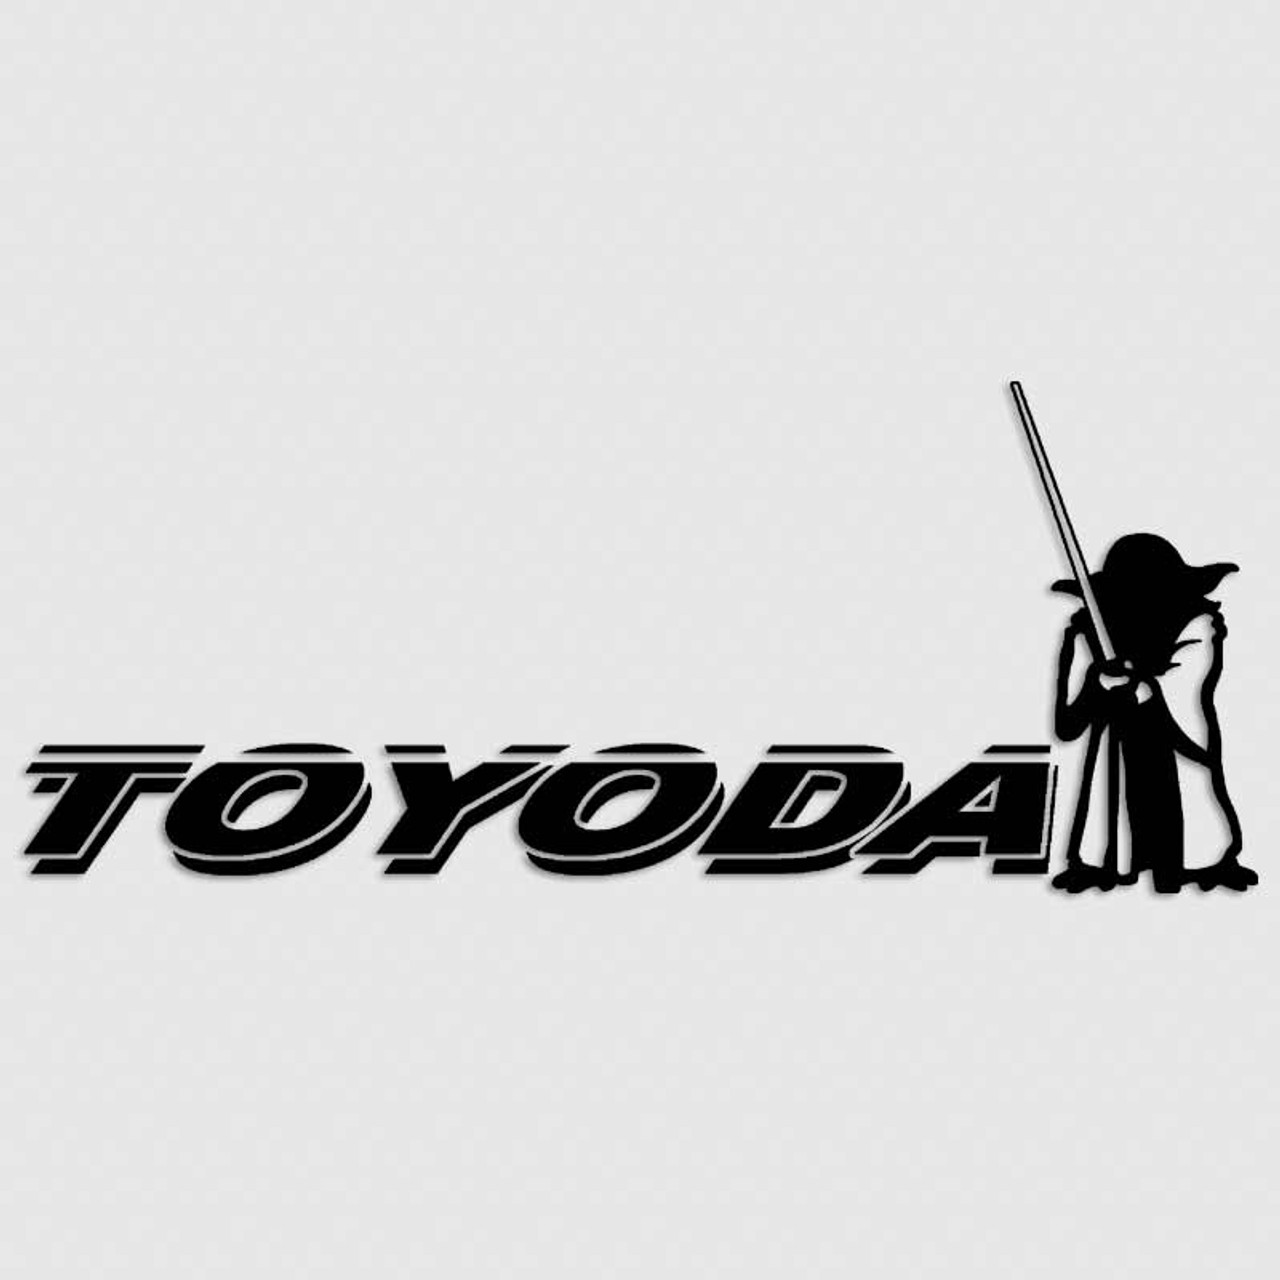 TOYODA cut vinyl window bumper sticker Toyota Yoda Star Wars